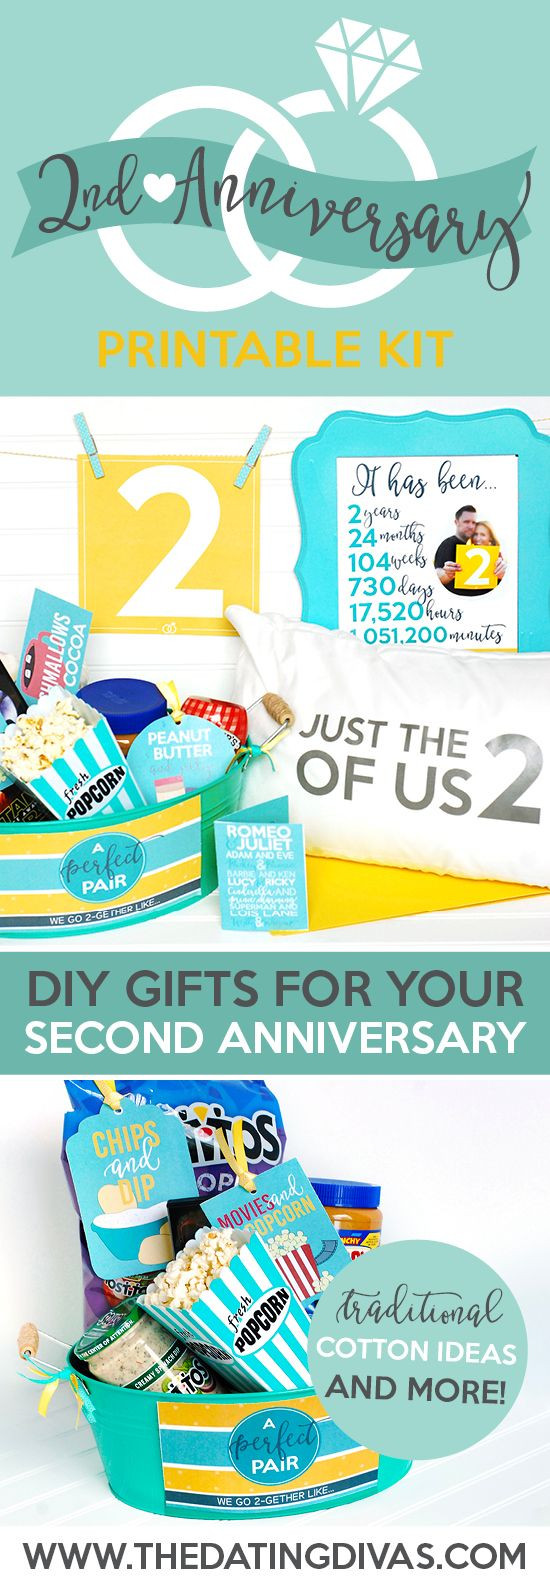 Best ideas about 2Nd Wedding Anniversary Gift Ideas
. Save or Pin Best 20 Second anniversary t ideas on Pinterest Now.